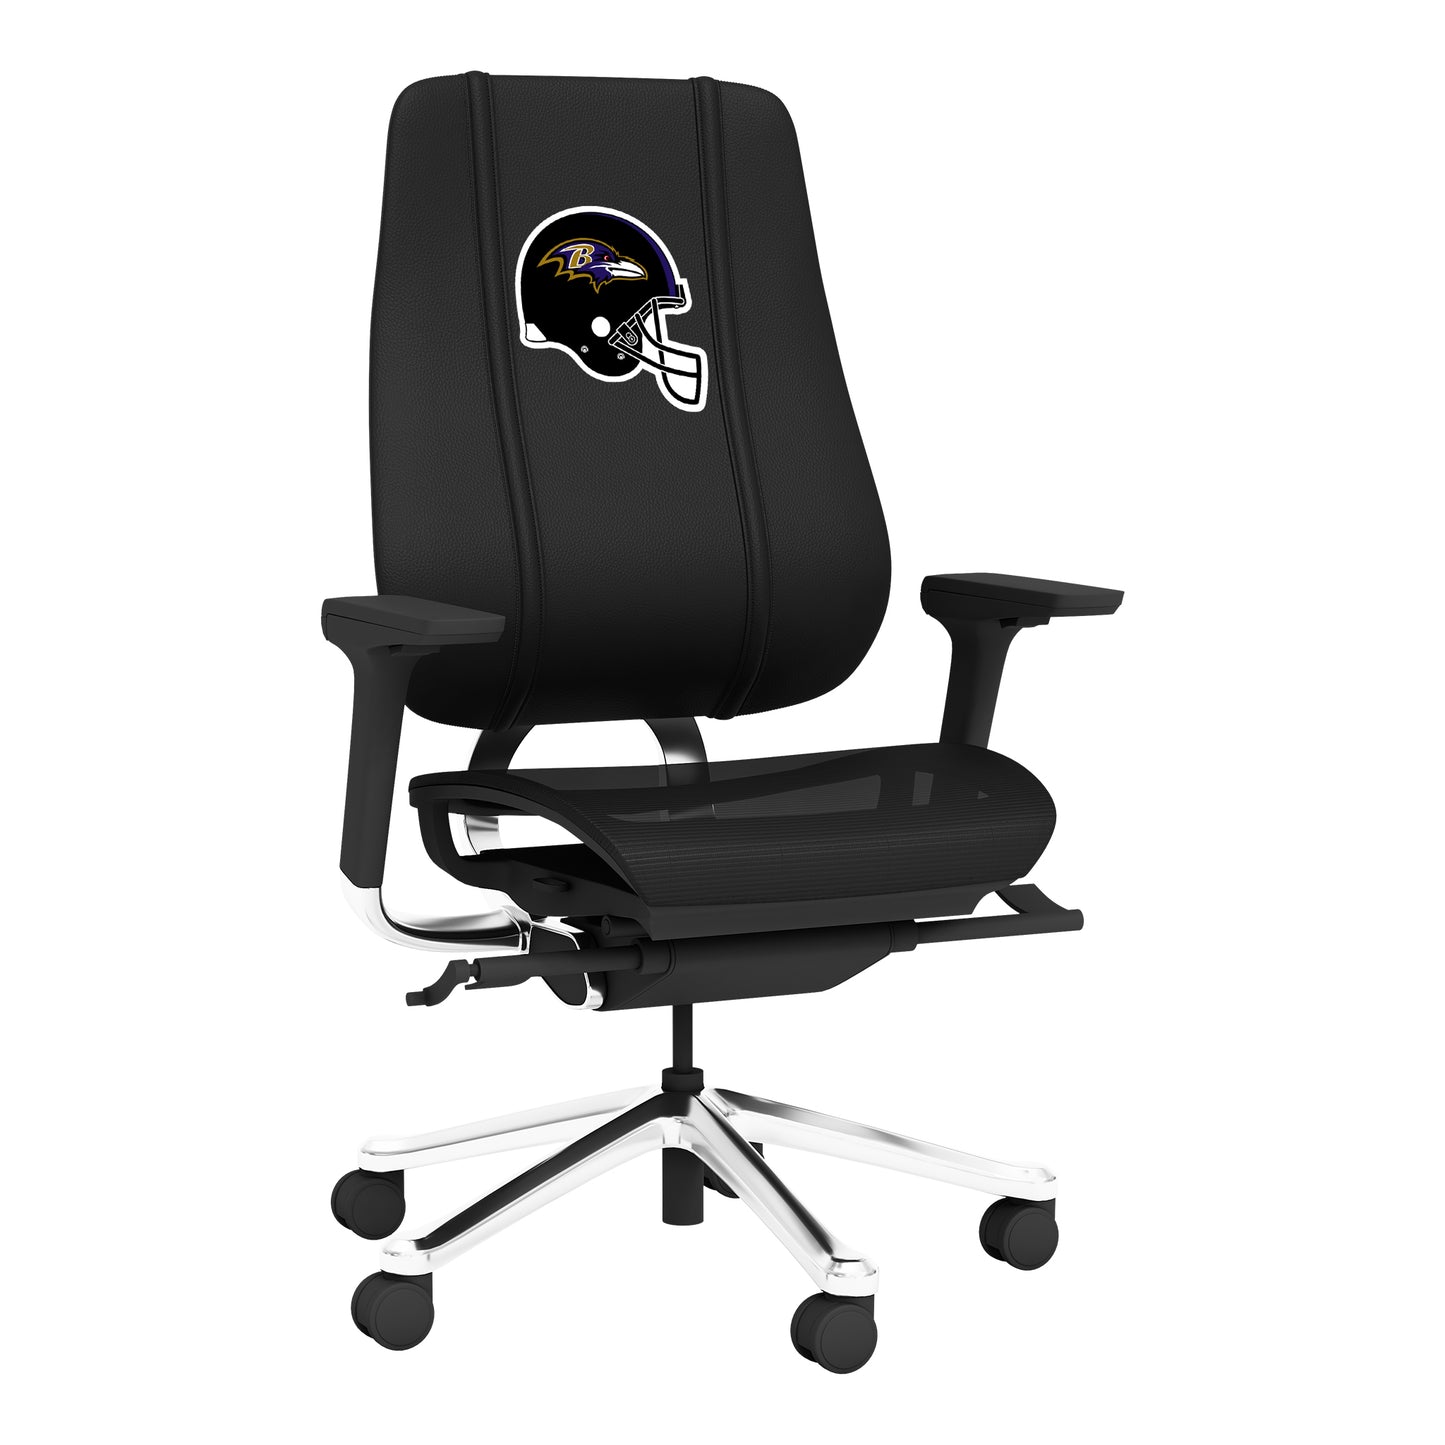 PhantomX Mesh Gaming Chair with Baltimore Ravens Helmet Logo